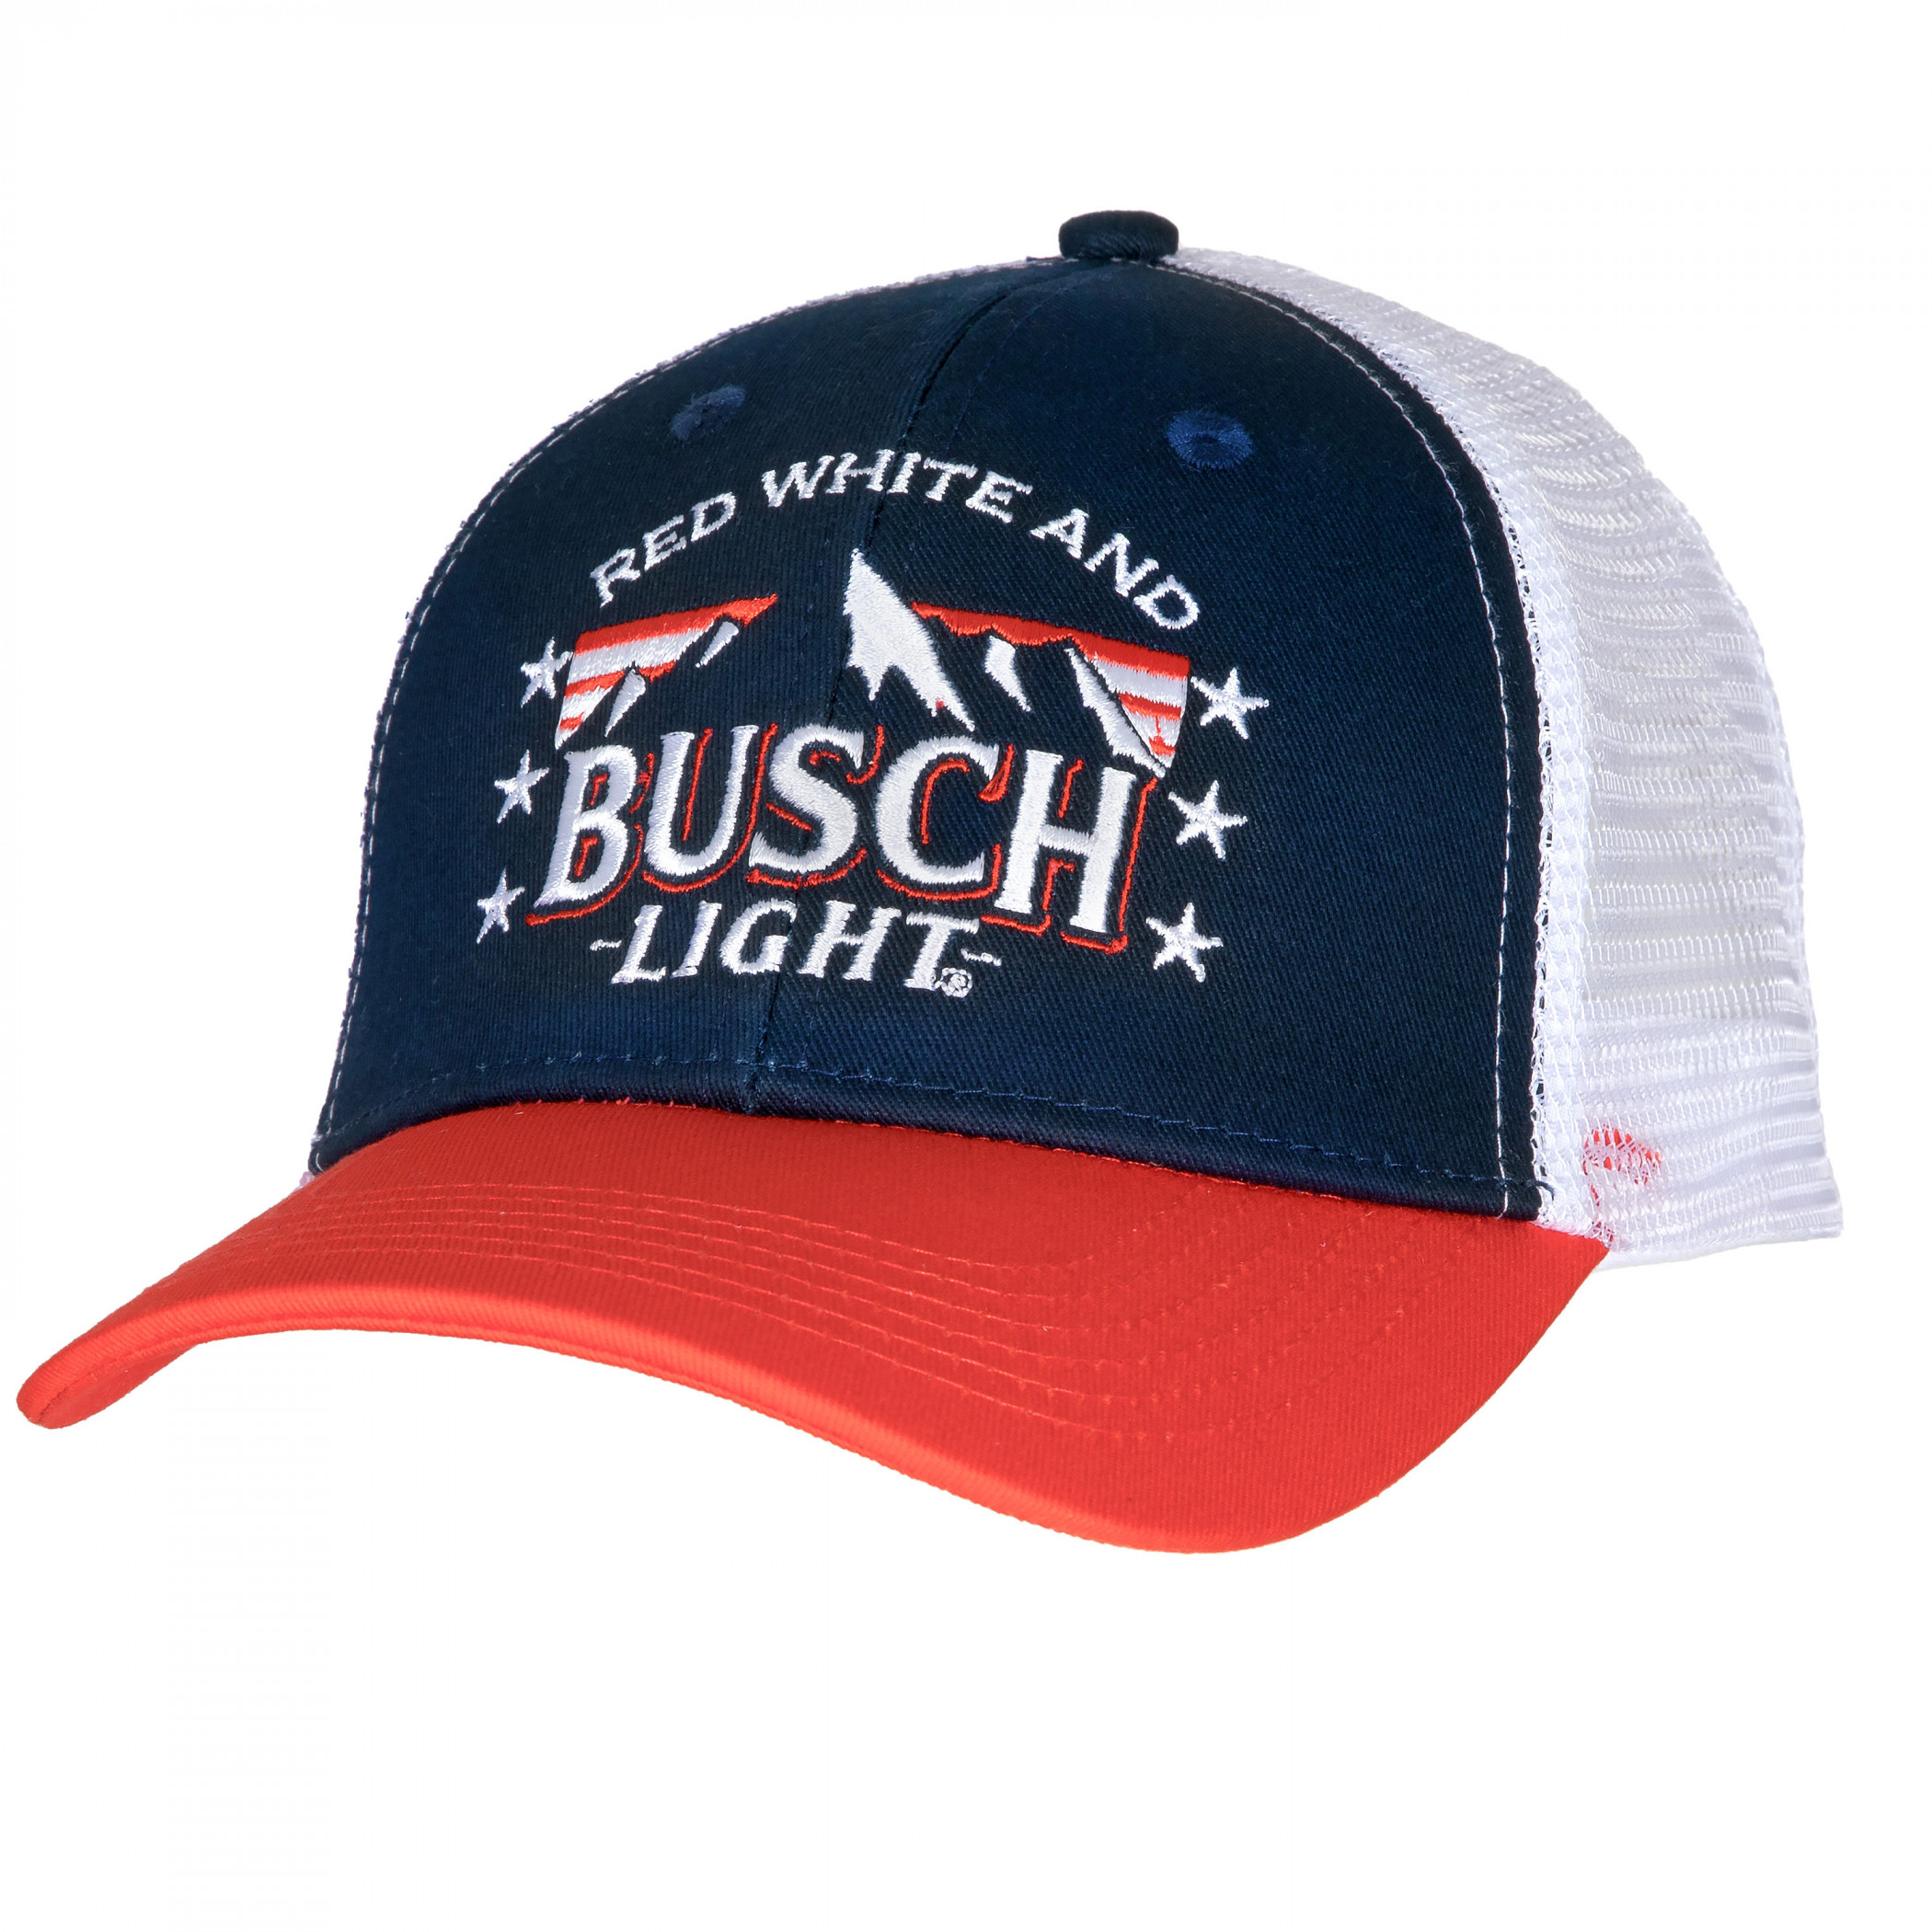 Busch Red White and Busch Light Snapback Cap